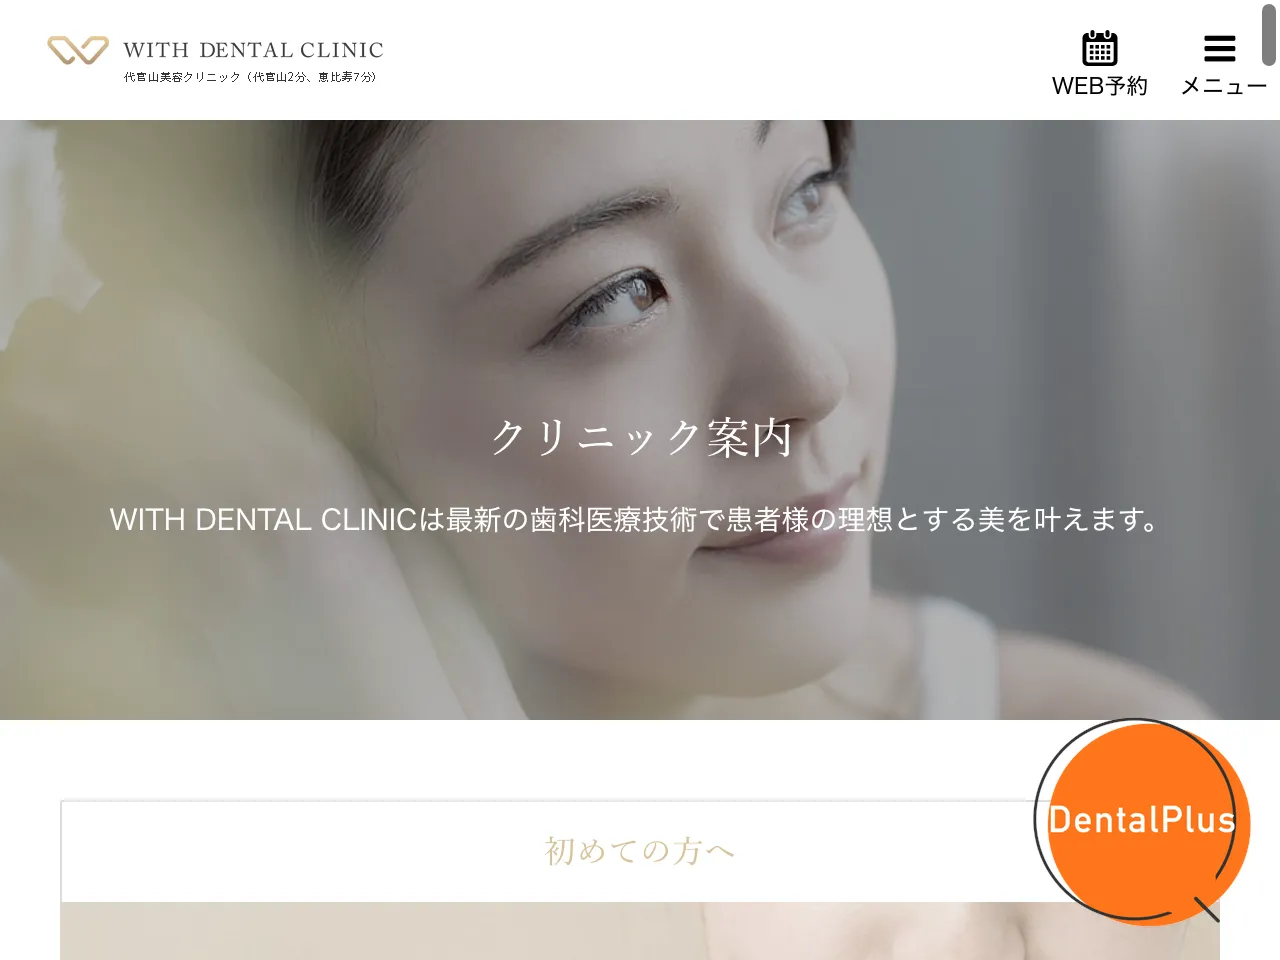 WITH DENTAL CLINIC 新宿のウェブサイト